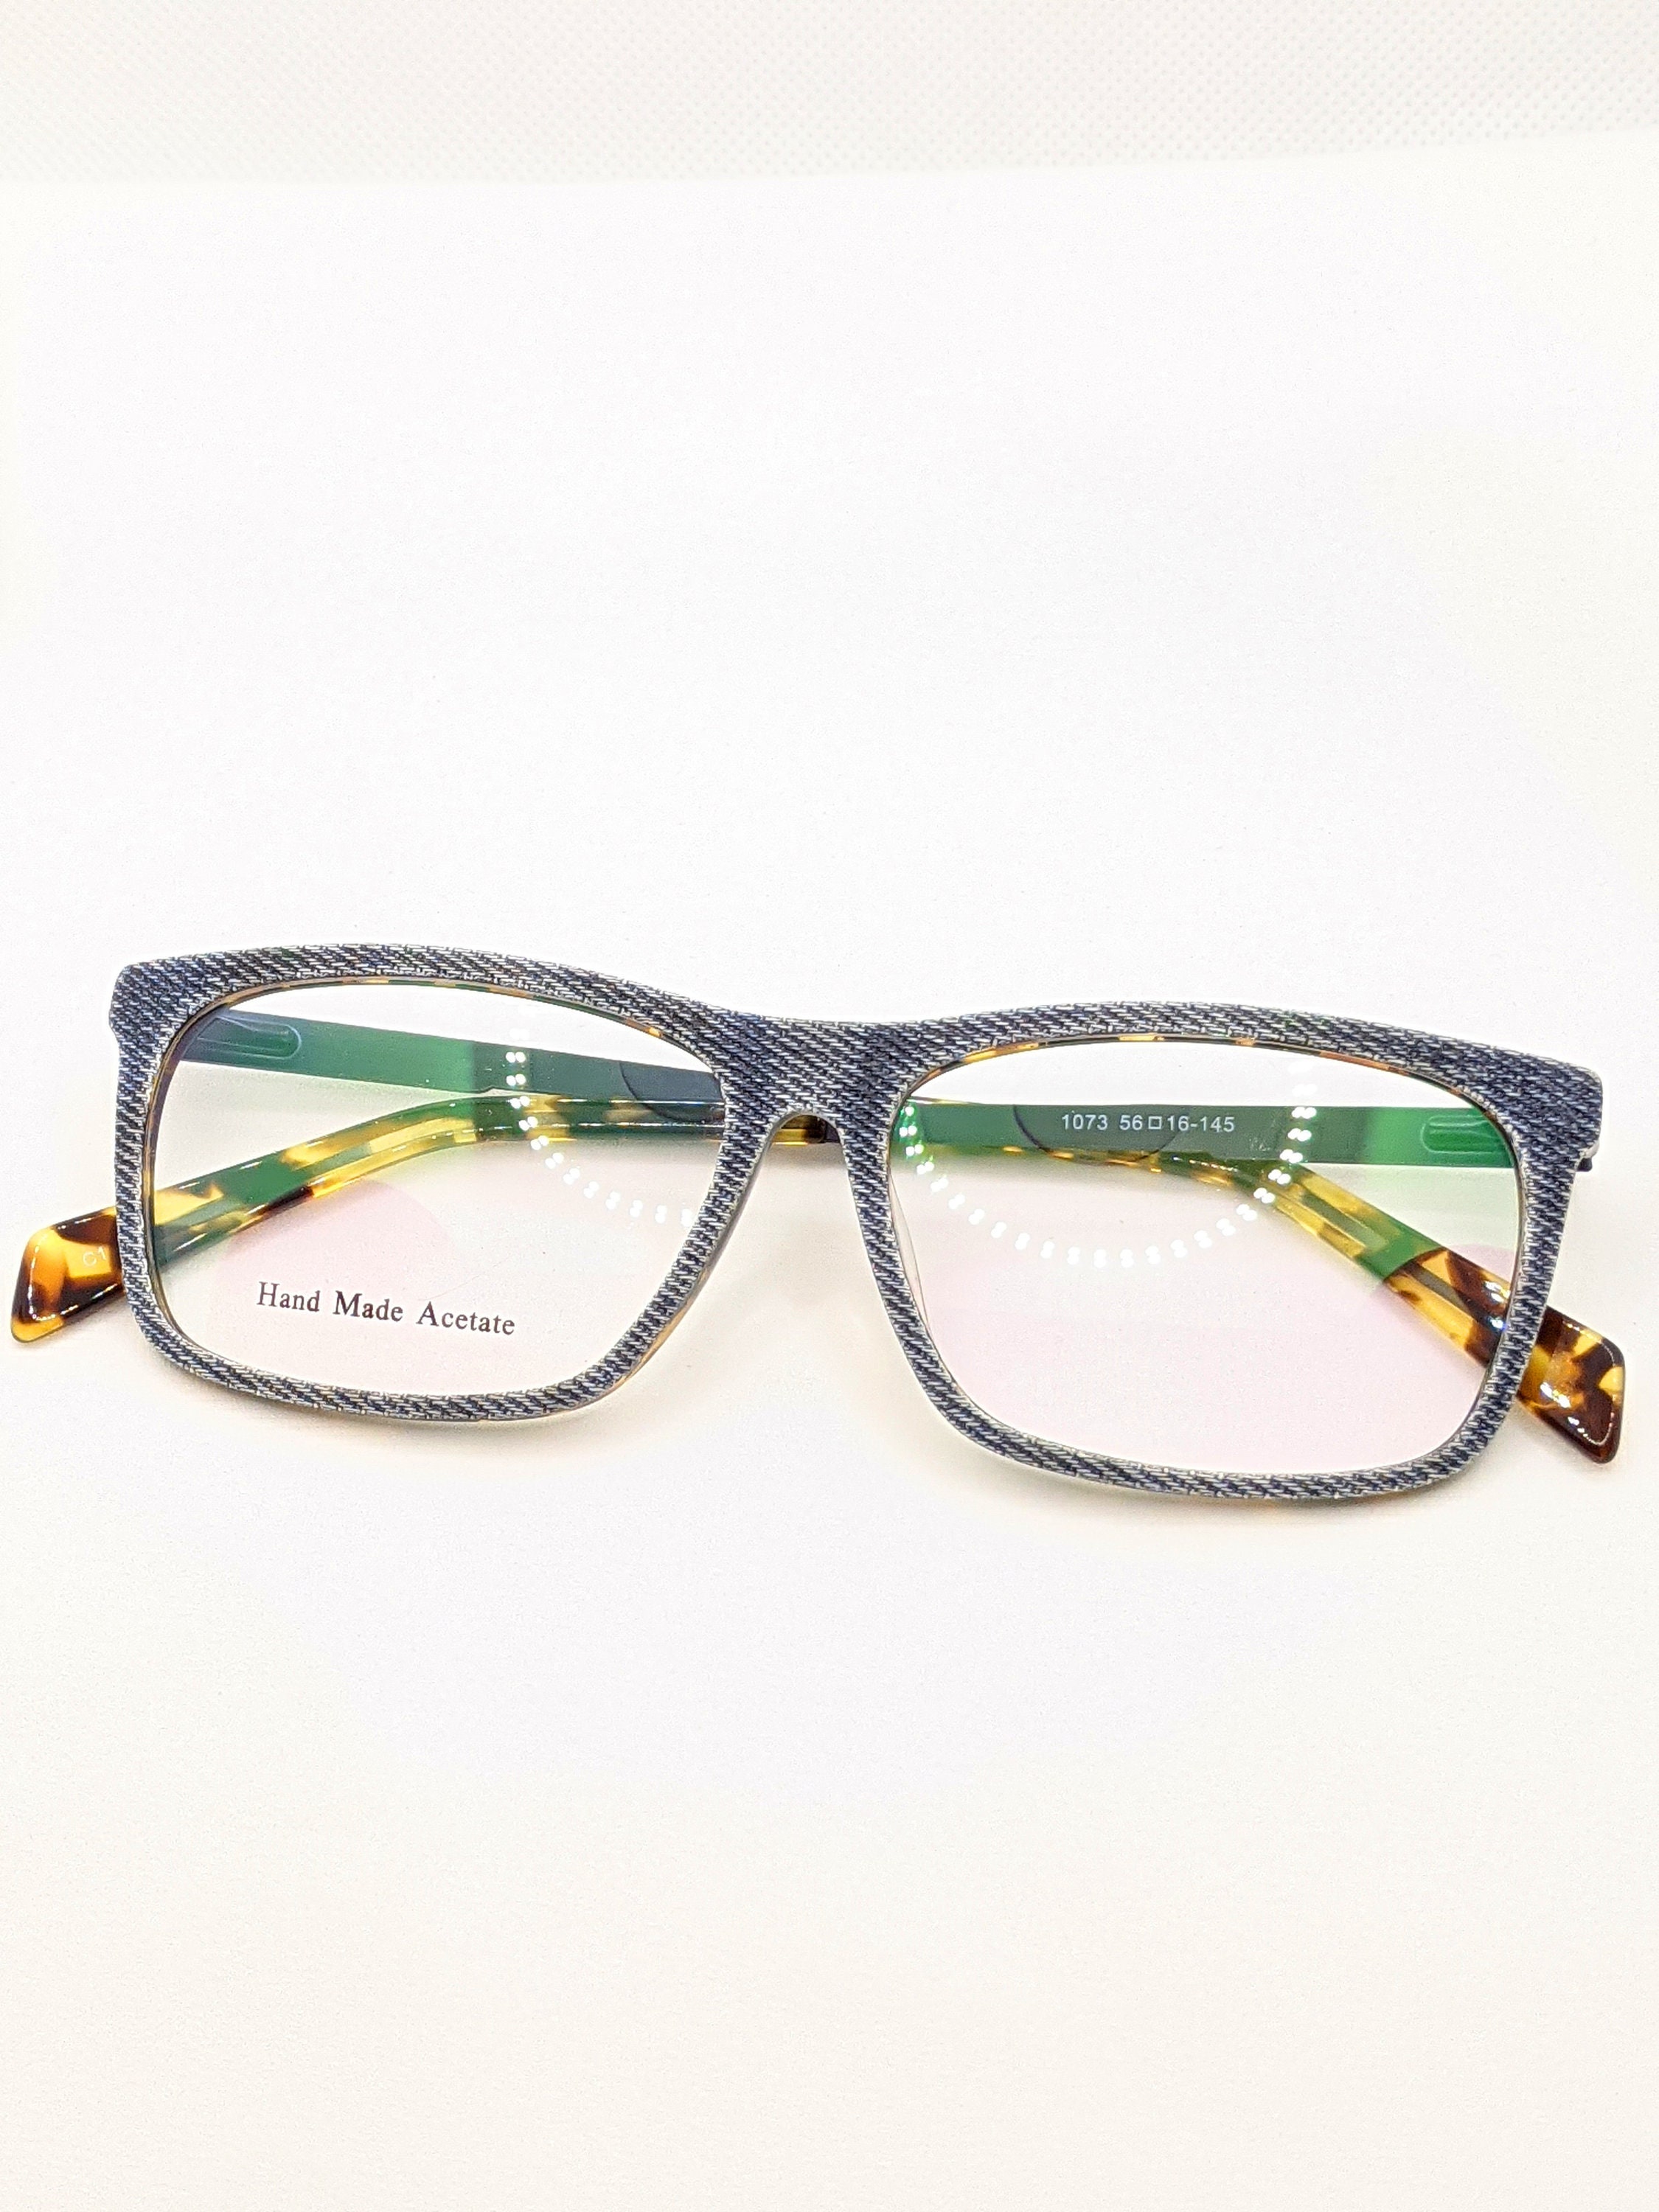 Transparent Sunglasses Square Prescription Glasses Groomsmen Proposal Eye Glasses Frames